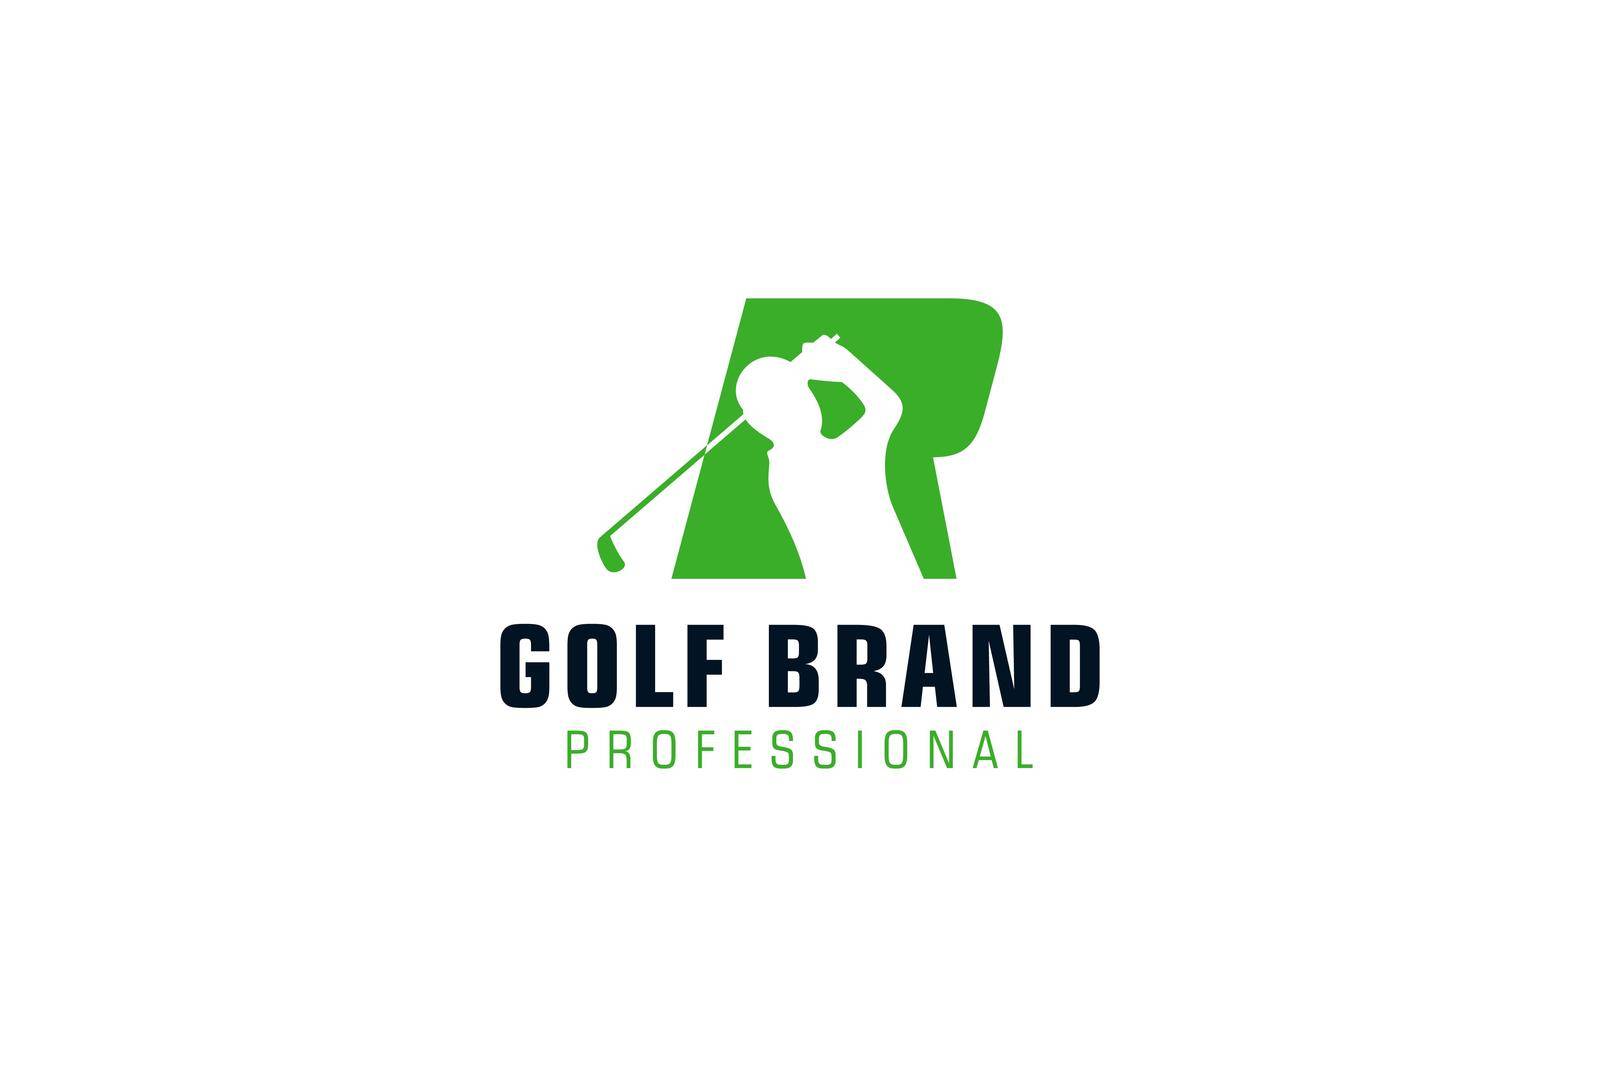 Letter R for Golf logo design vector template, Vector label of golf, Logo of golf championship, illustration, Creative icon, design